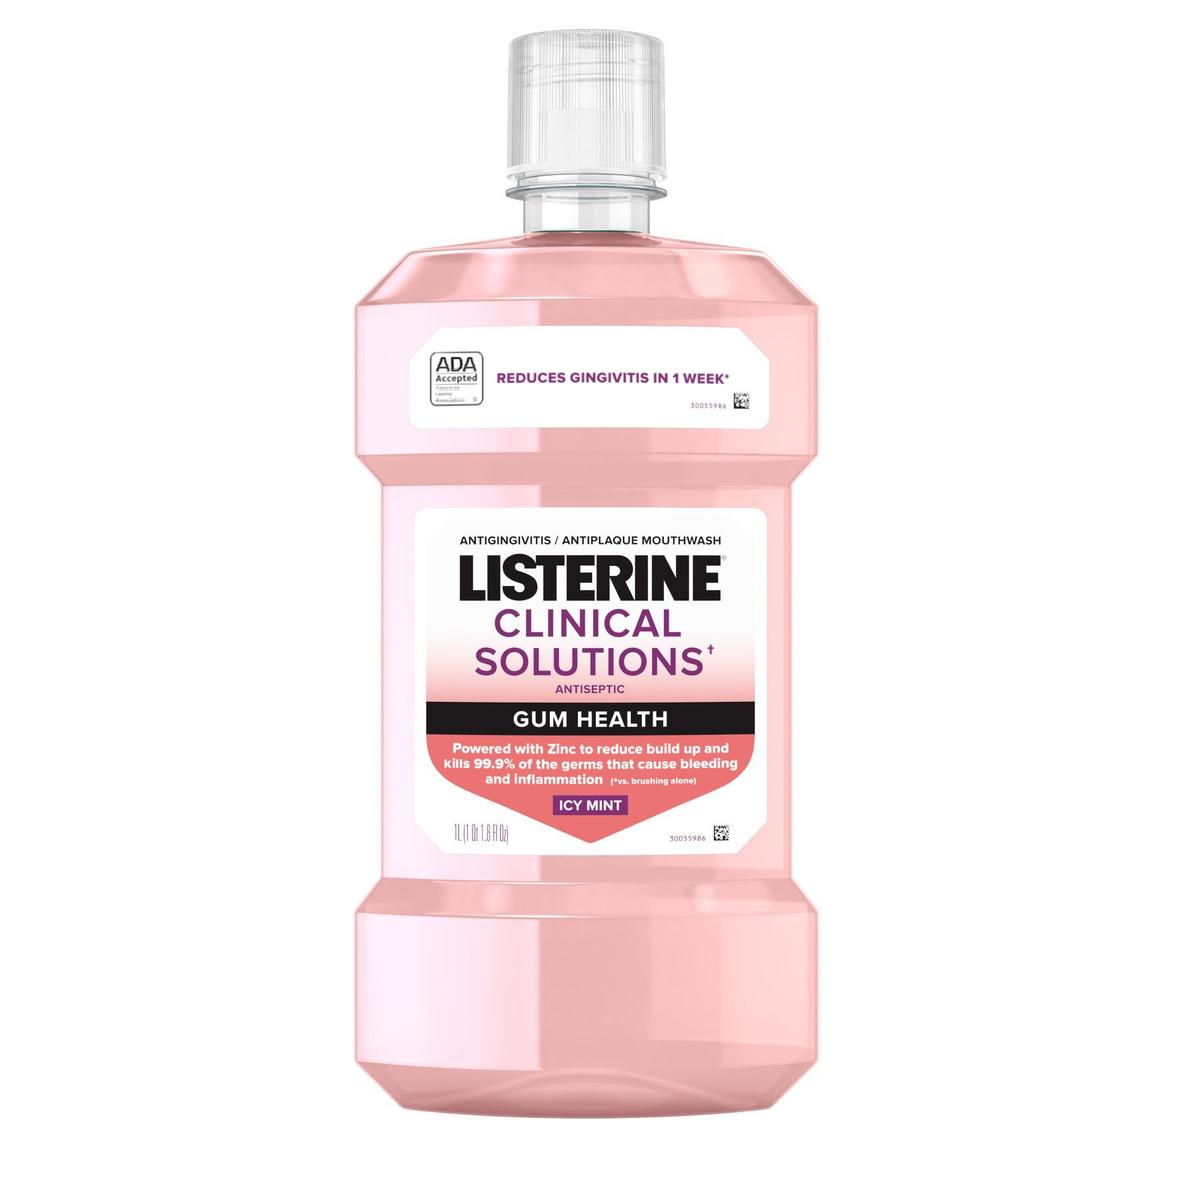 Listerine Clinical Solutions Gum Health mouthwash bottle front